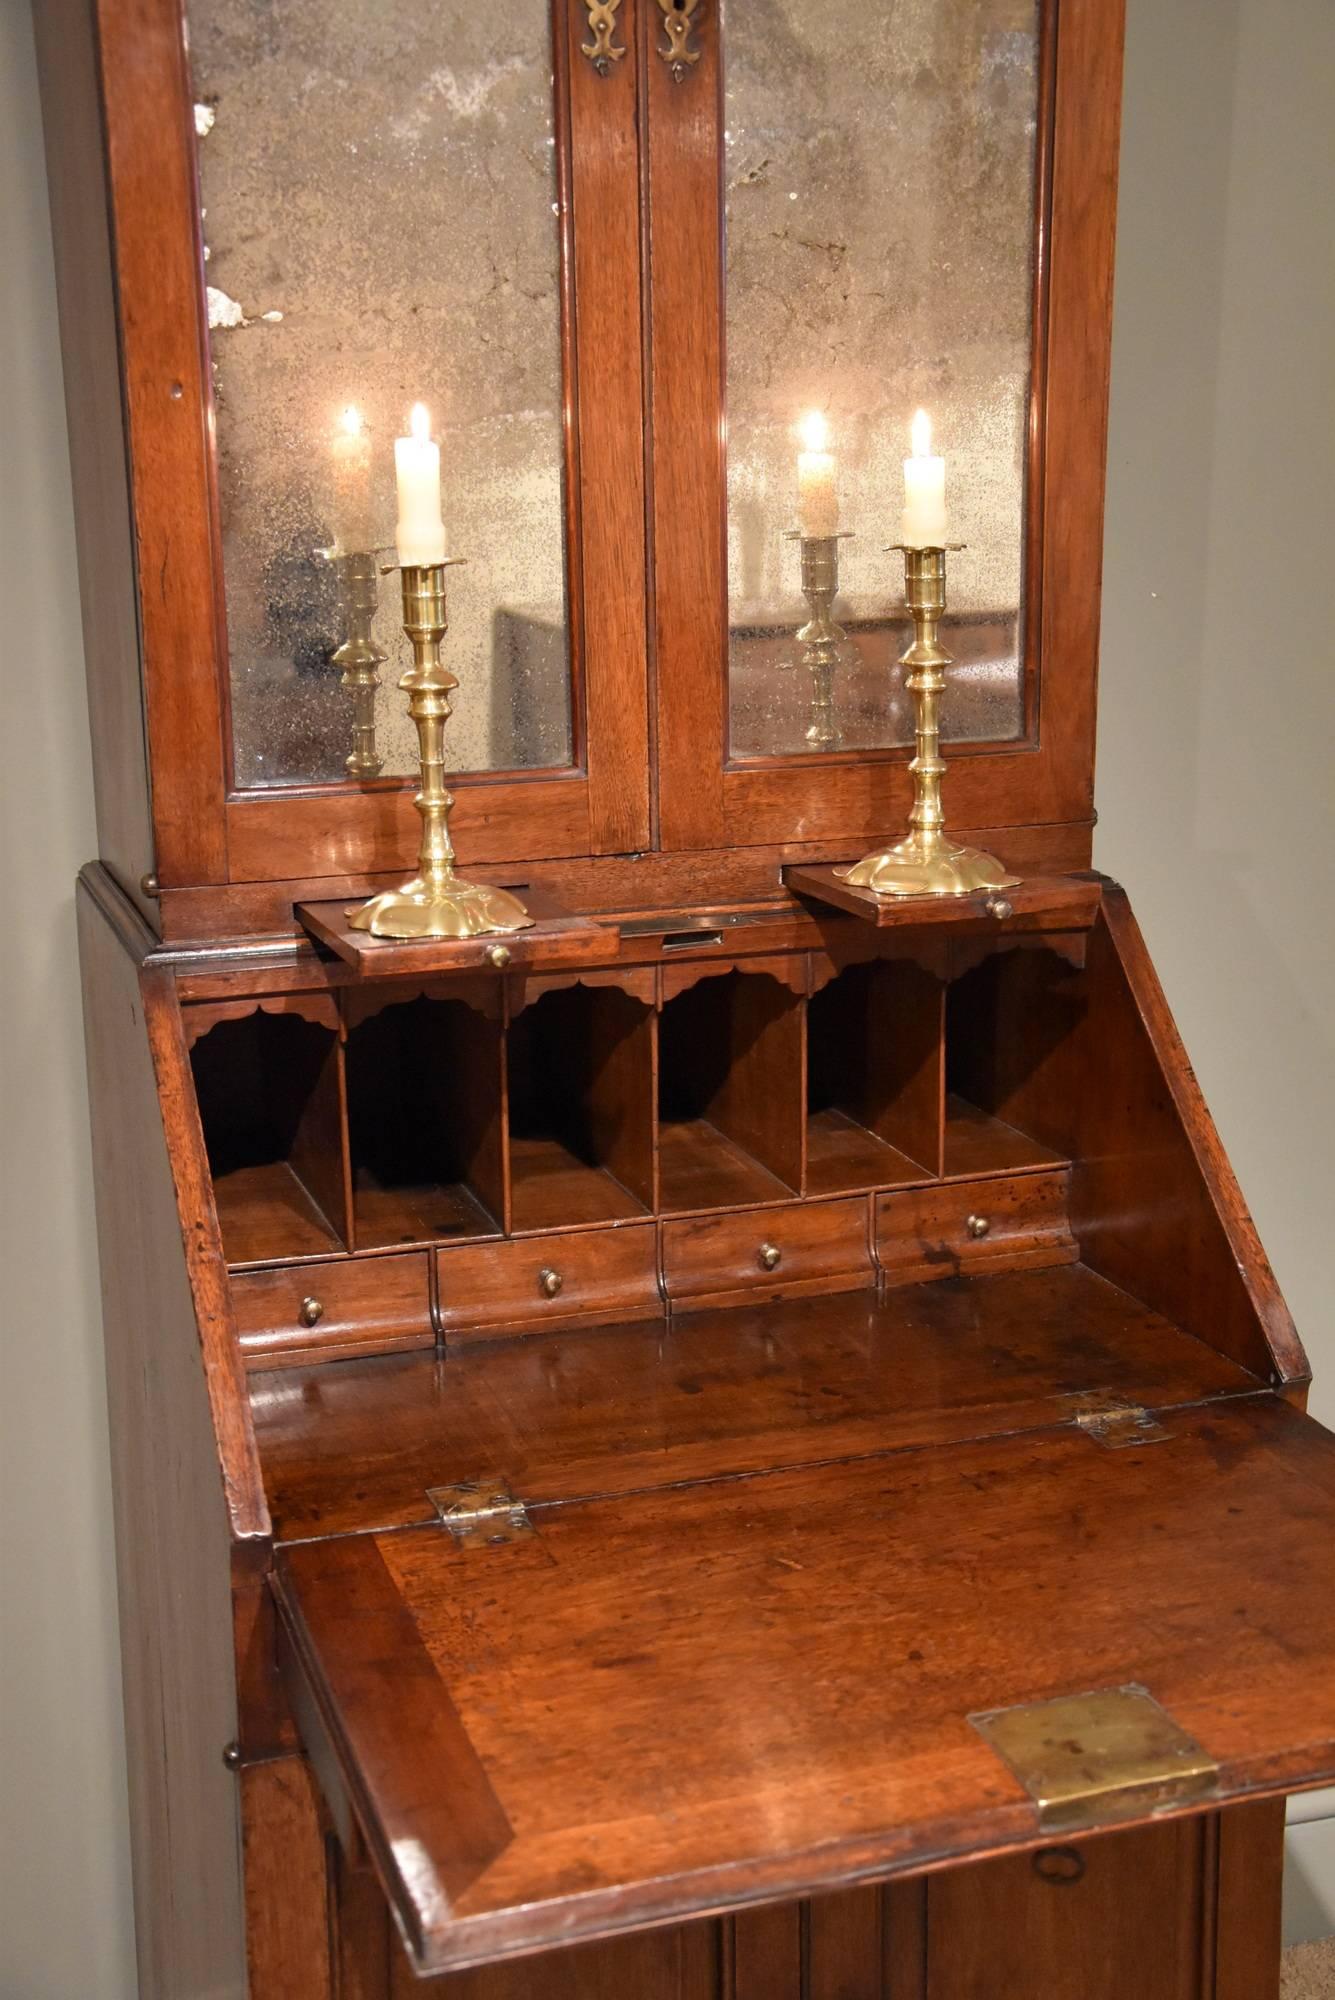 Great Britain (UK) Early 18th Century Solid Walnut Bureau bookcase mirrors bun feet cupboard doors